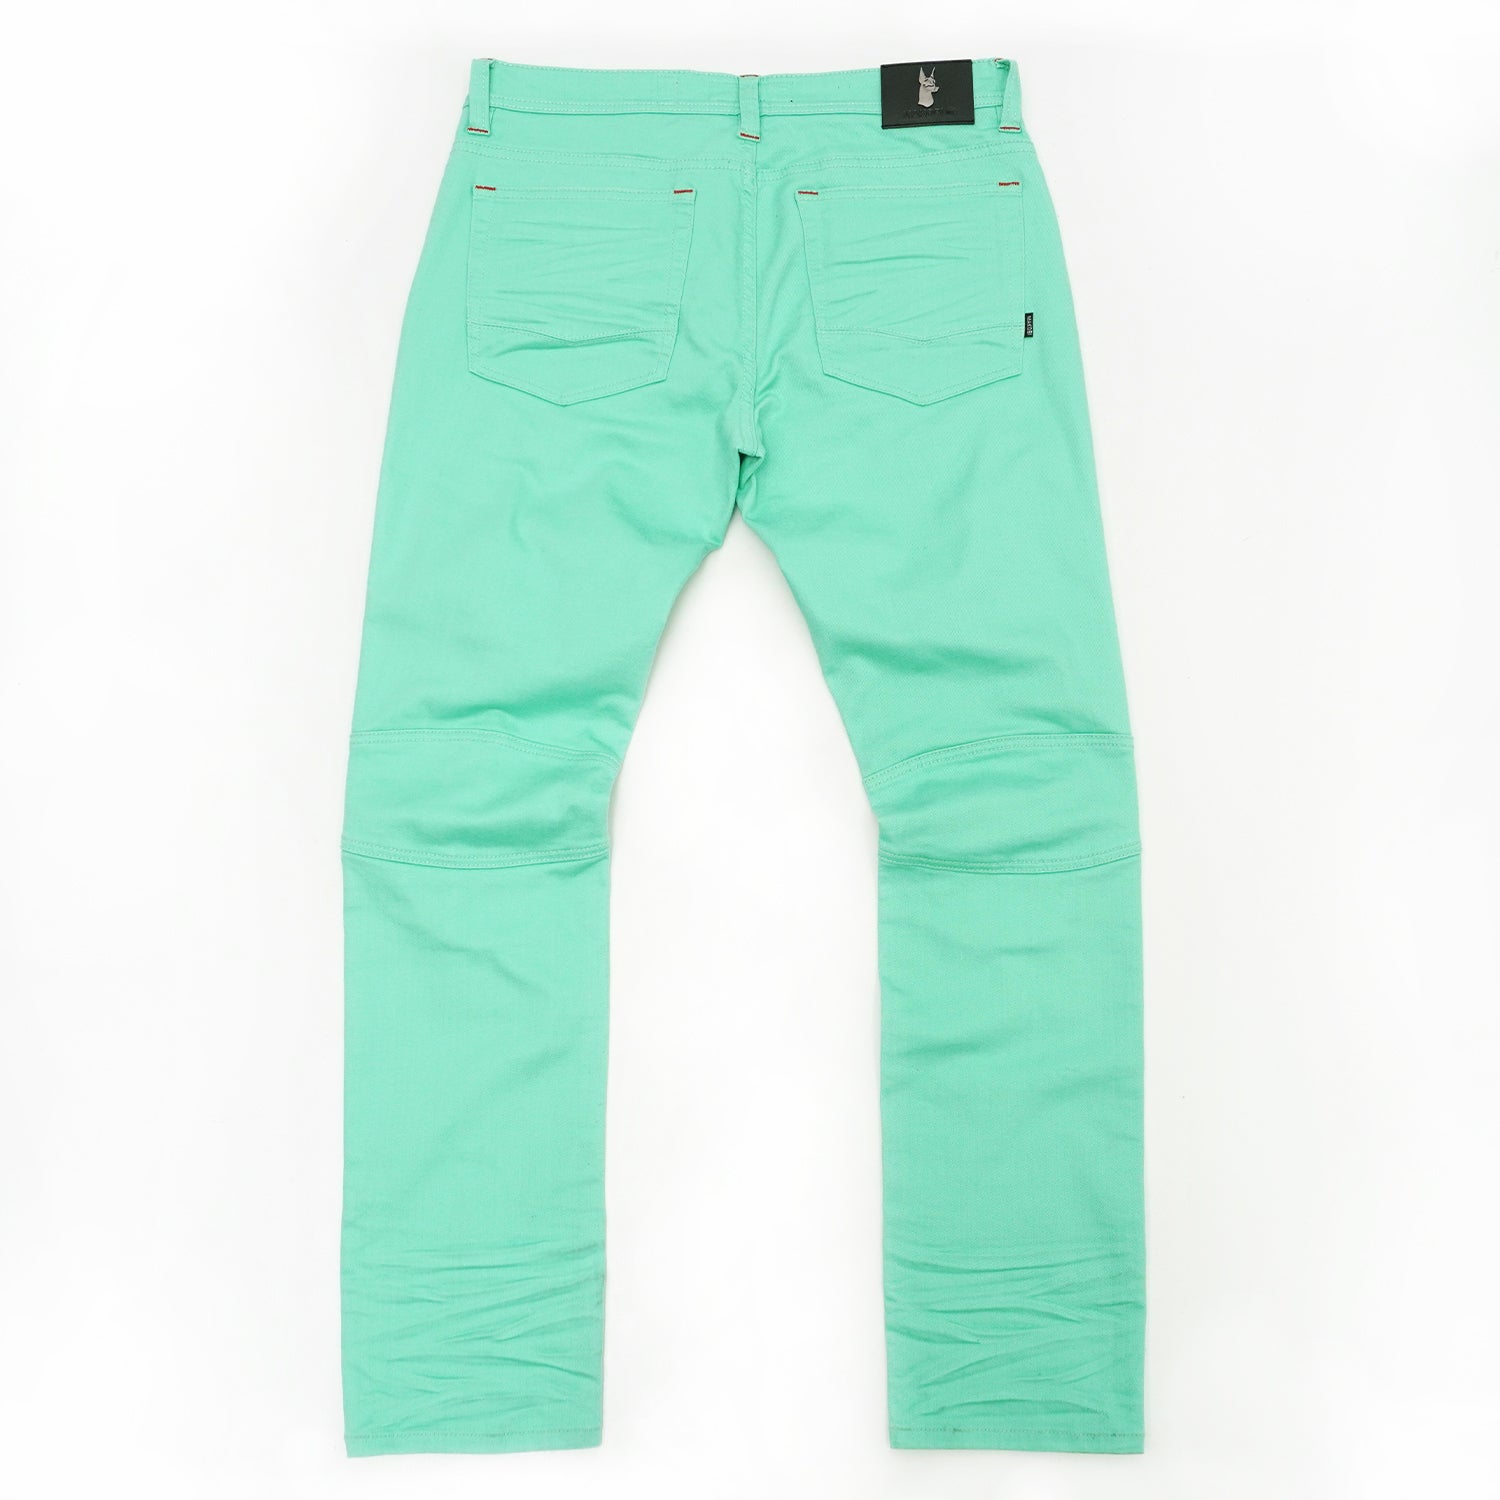 M1971 Denim Jeans - Green